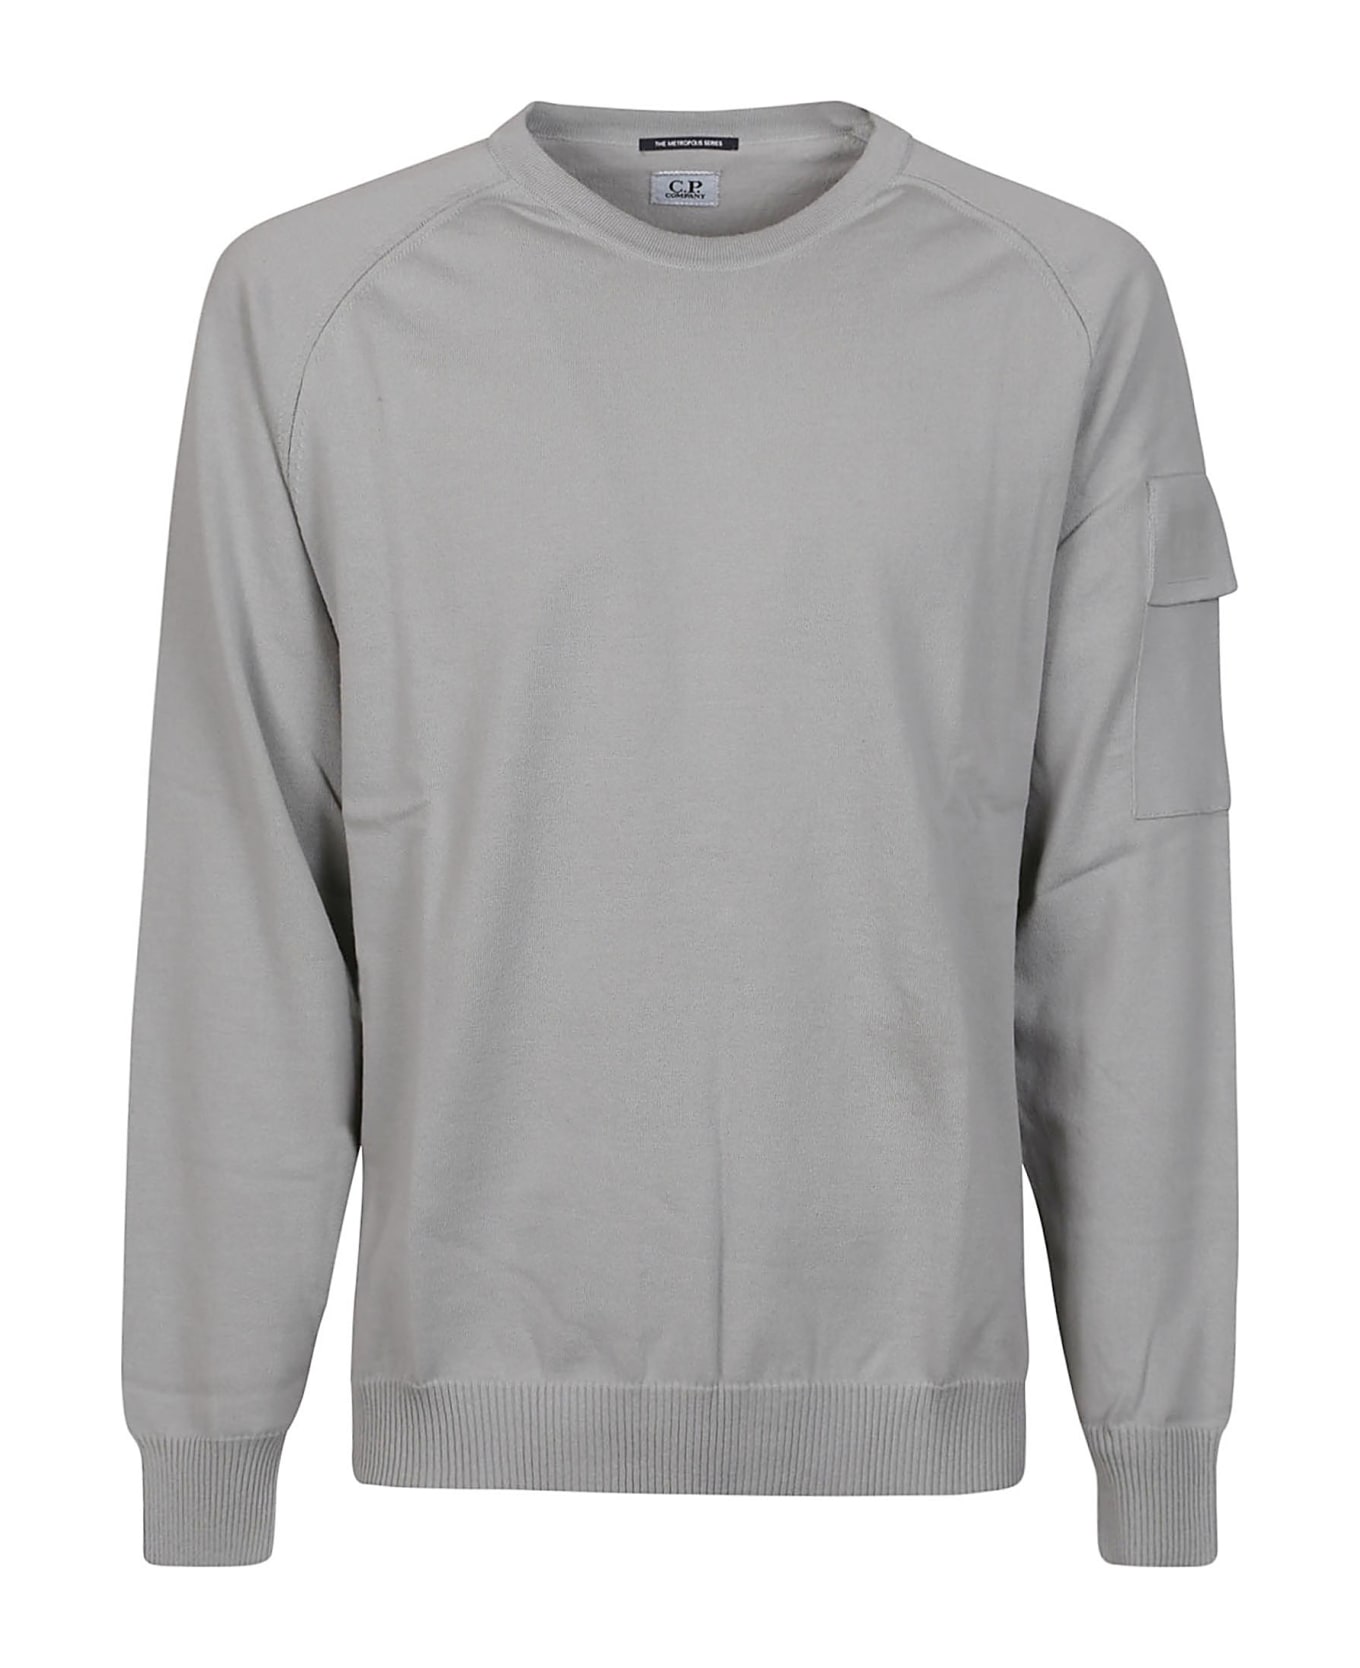 C.P. Company Metropolis Stretch Pocket Sweater - Drizzle Grey